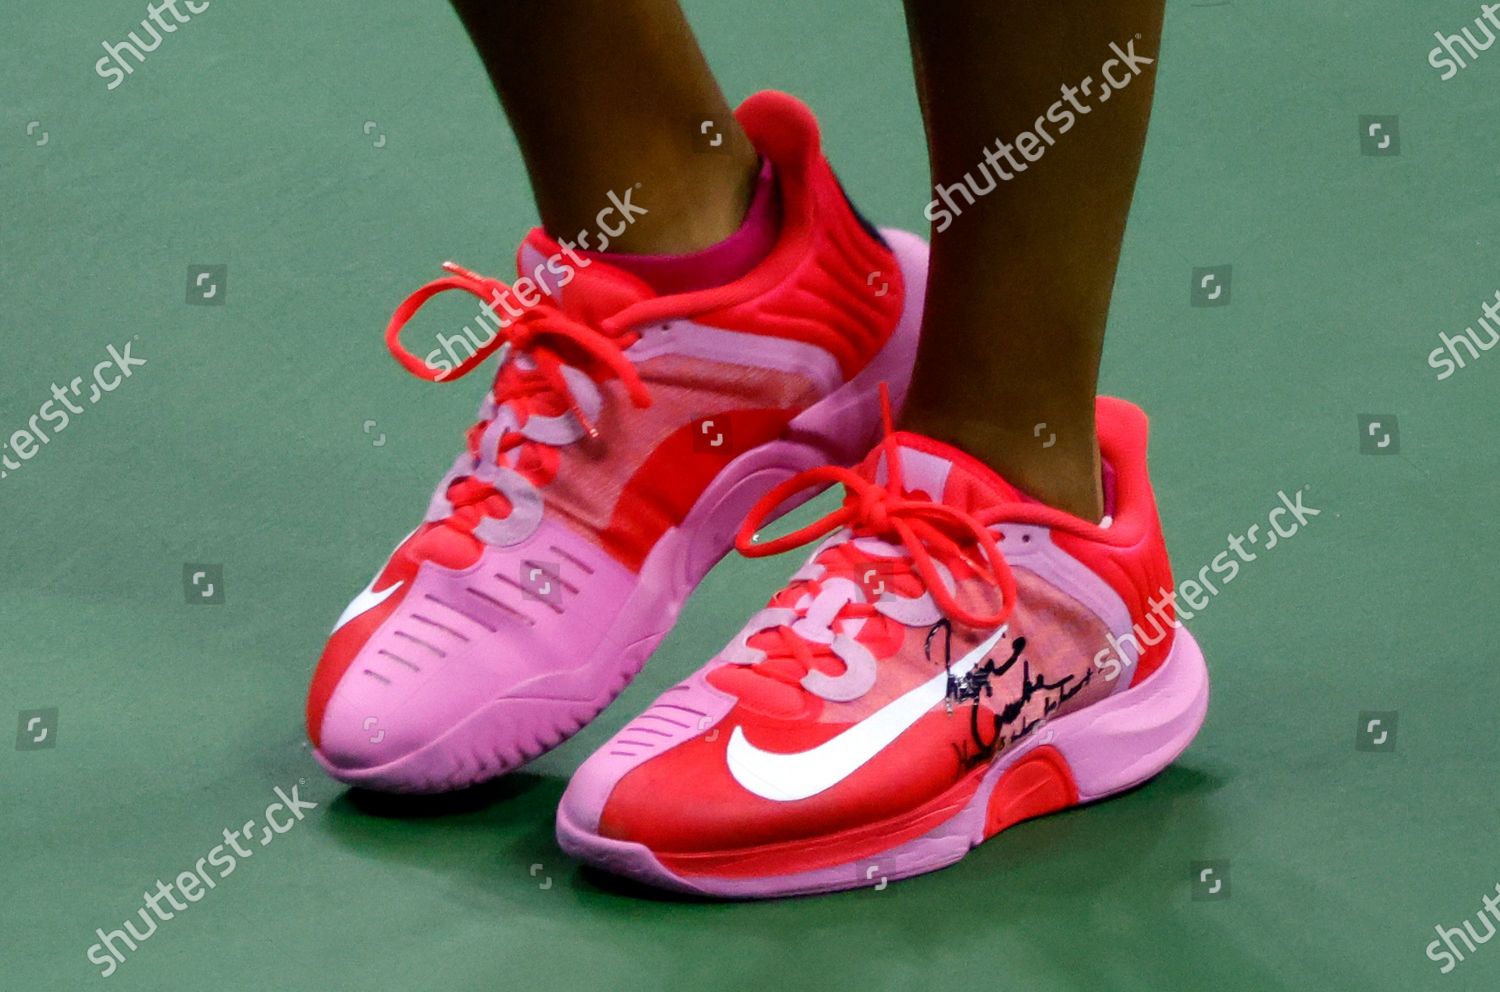 osaka tennis shoes